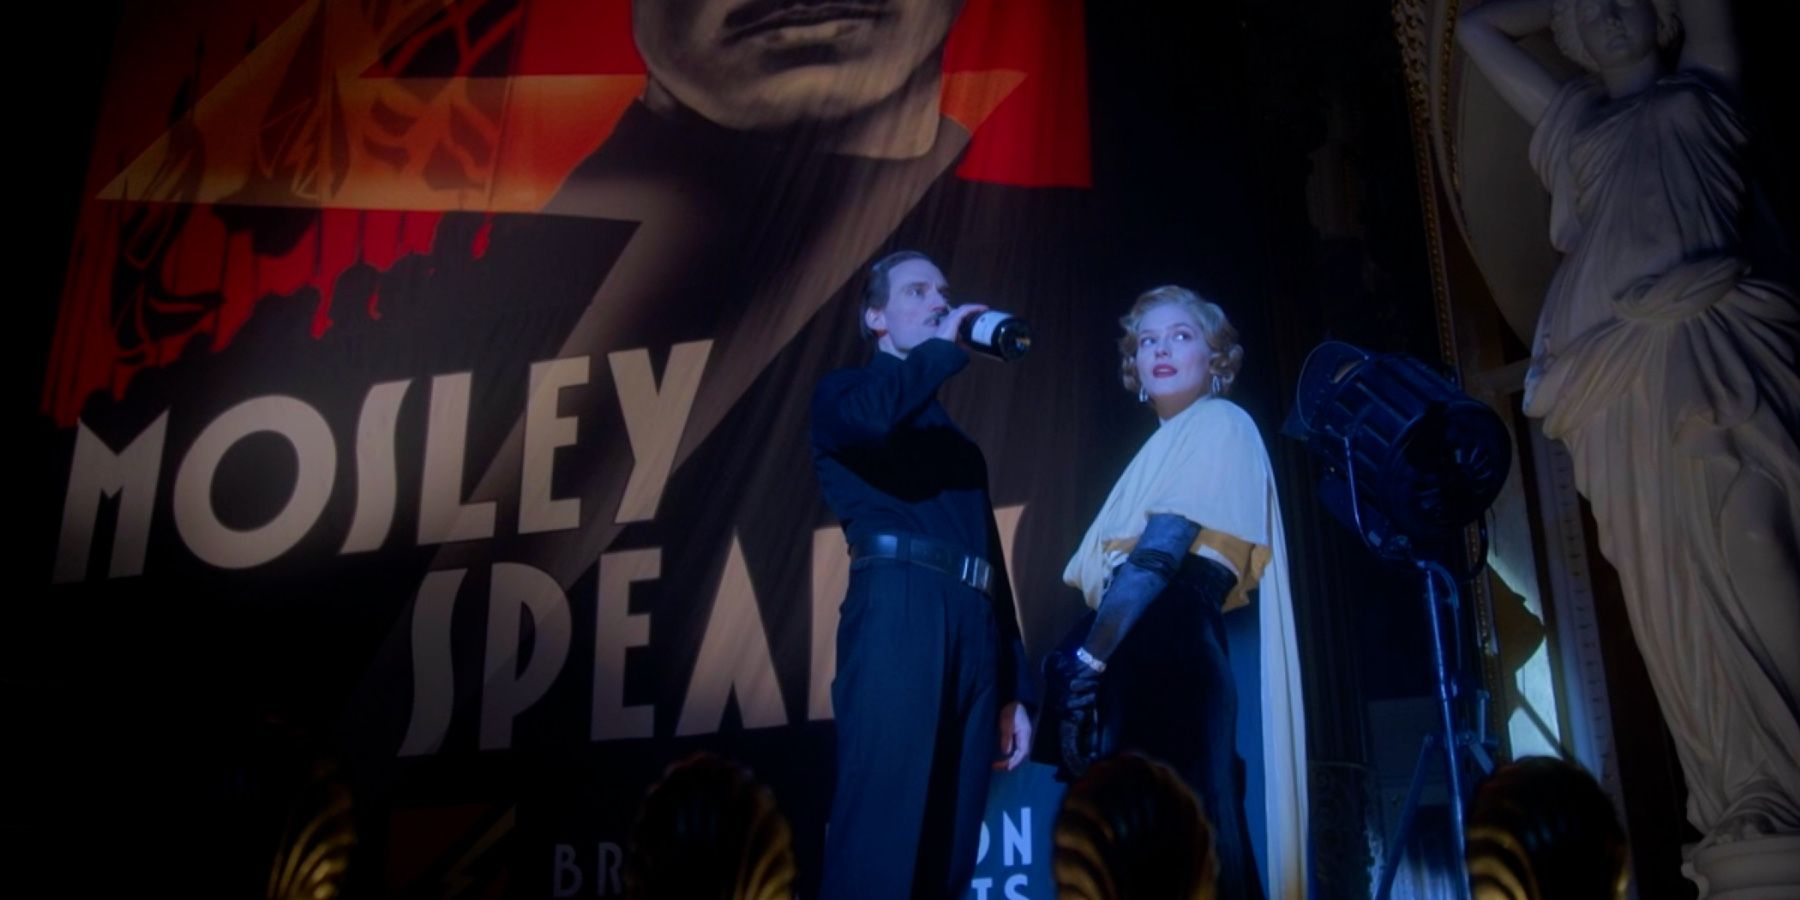 Peaky Blinders Season 6 True Story: Who Was Mosley’s Mistress?